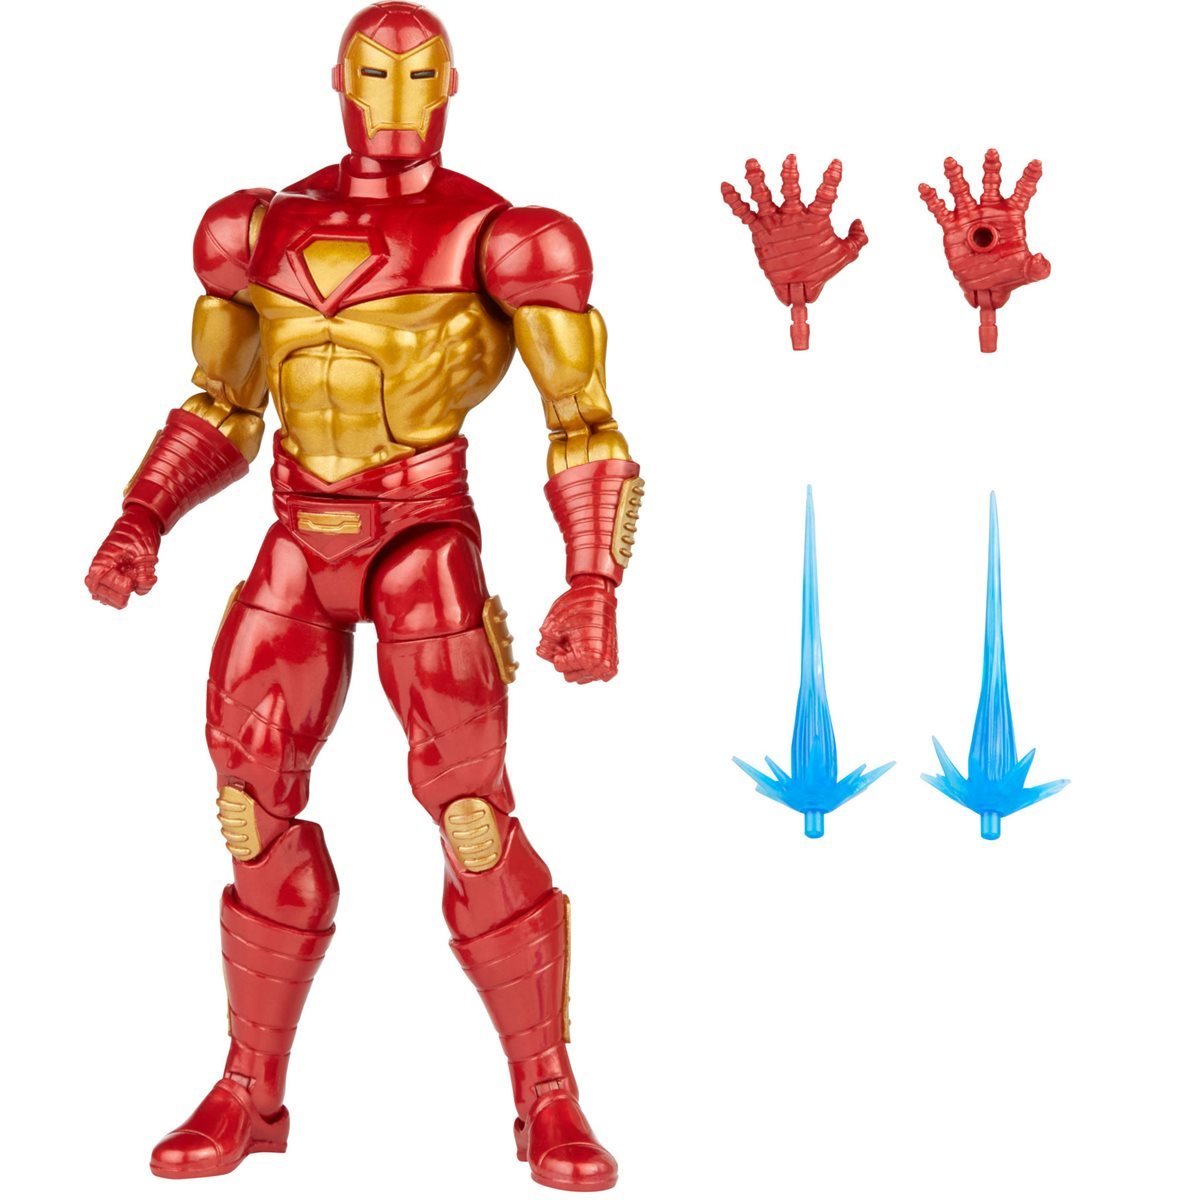 Marvel Legends Ursa Major build a figure wave Comic Modular Iron Man 6-inch figure and accessories